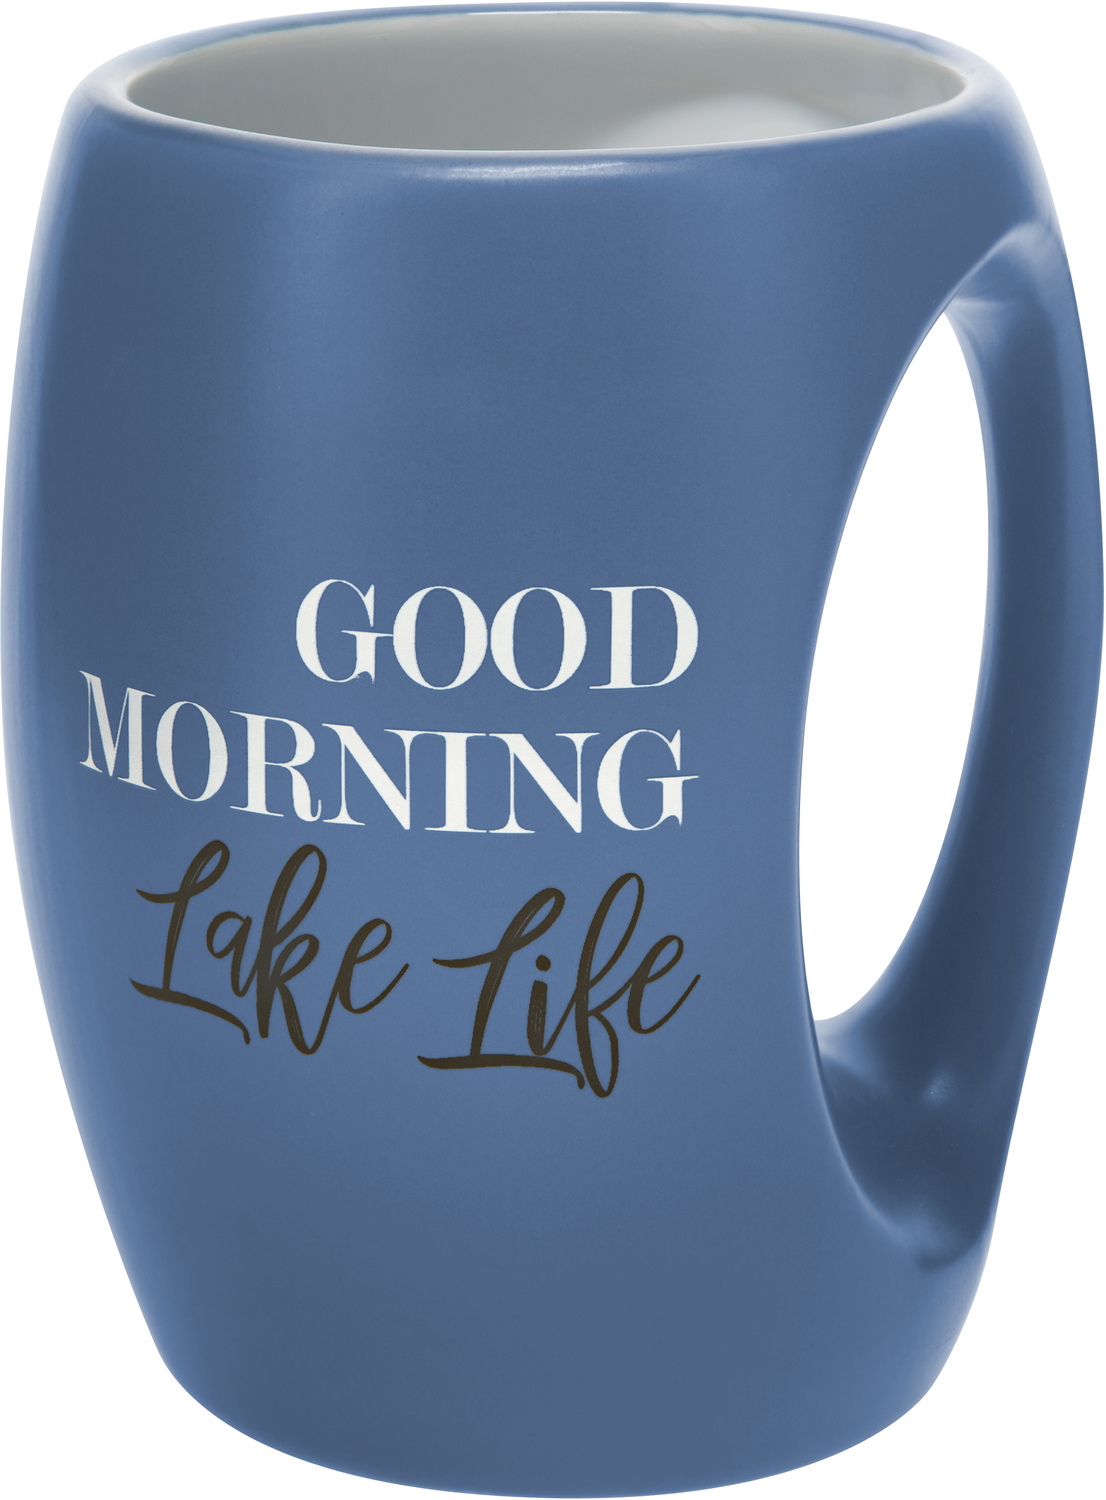 Lake Life by Good Morning - Lake Life - 16 oz Cup